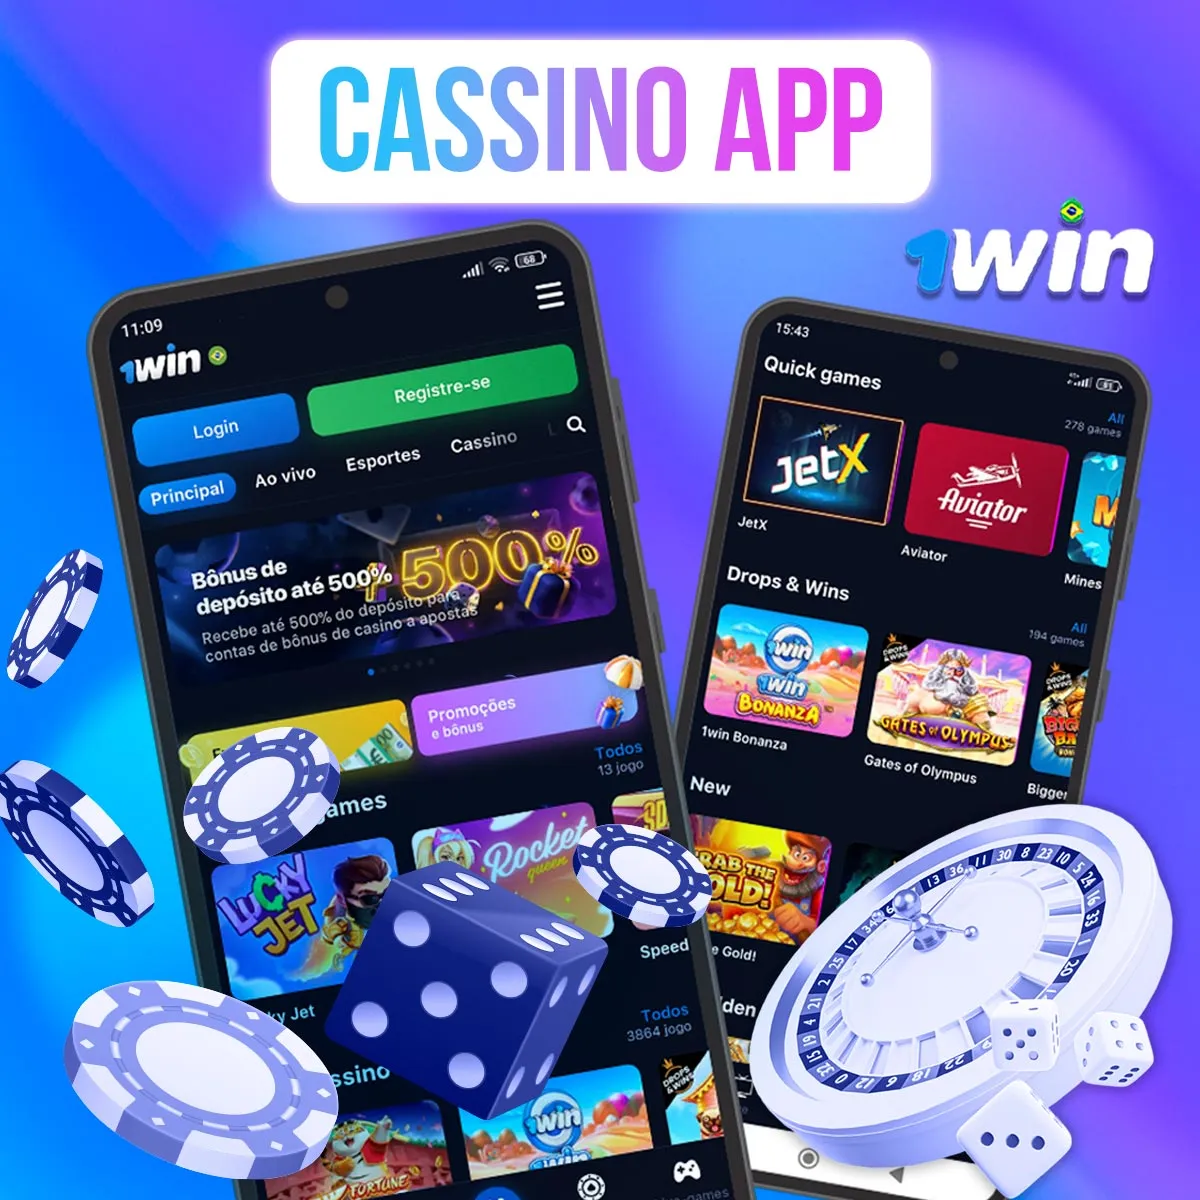 Aplicativo móvel de cassino 1win no mercado de apostas do Brasil